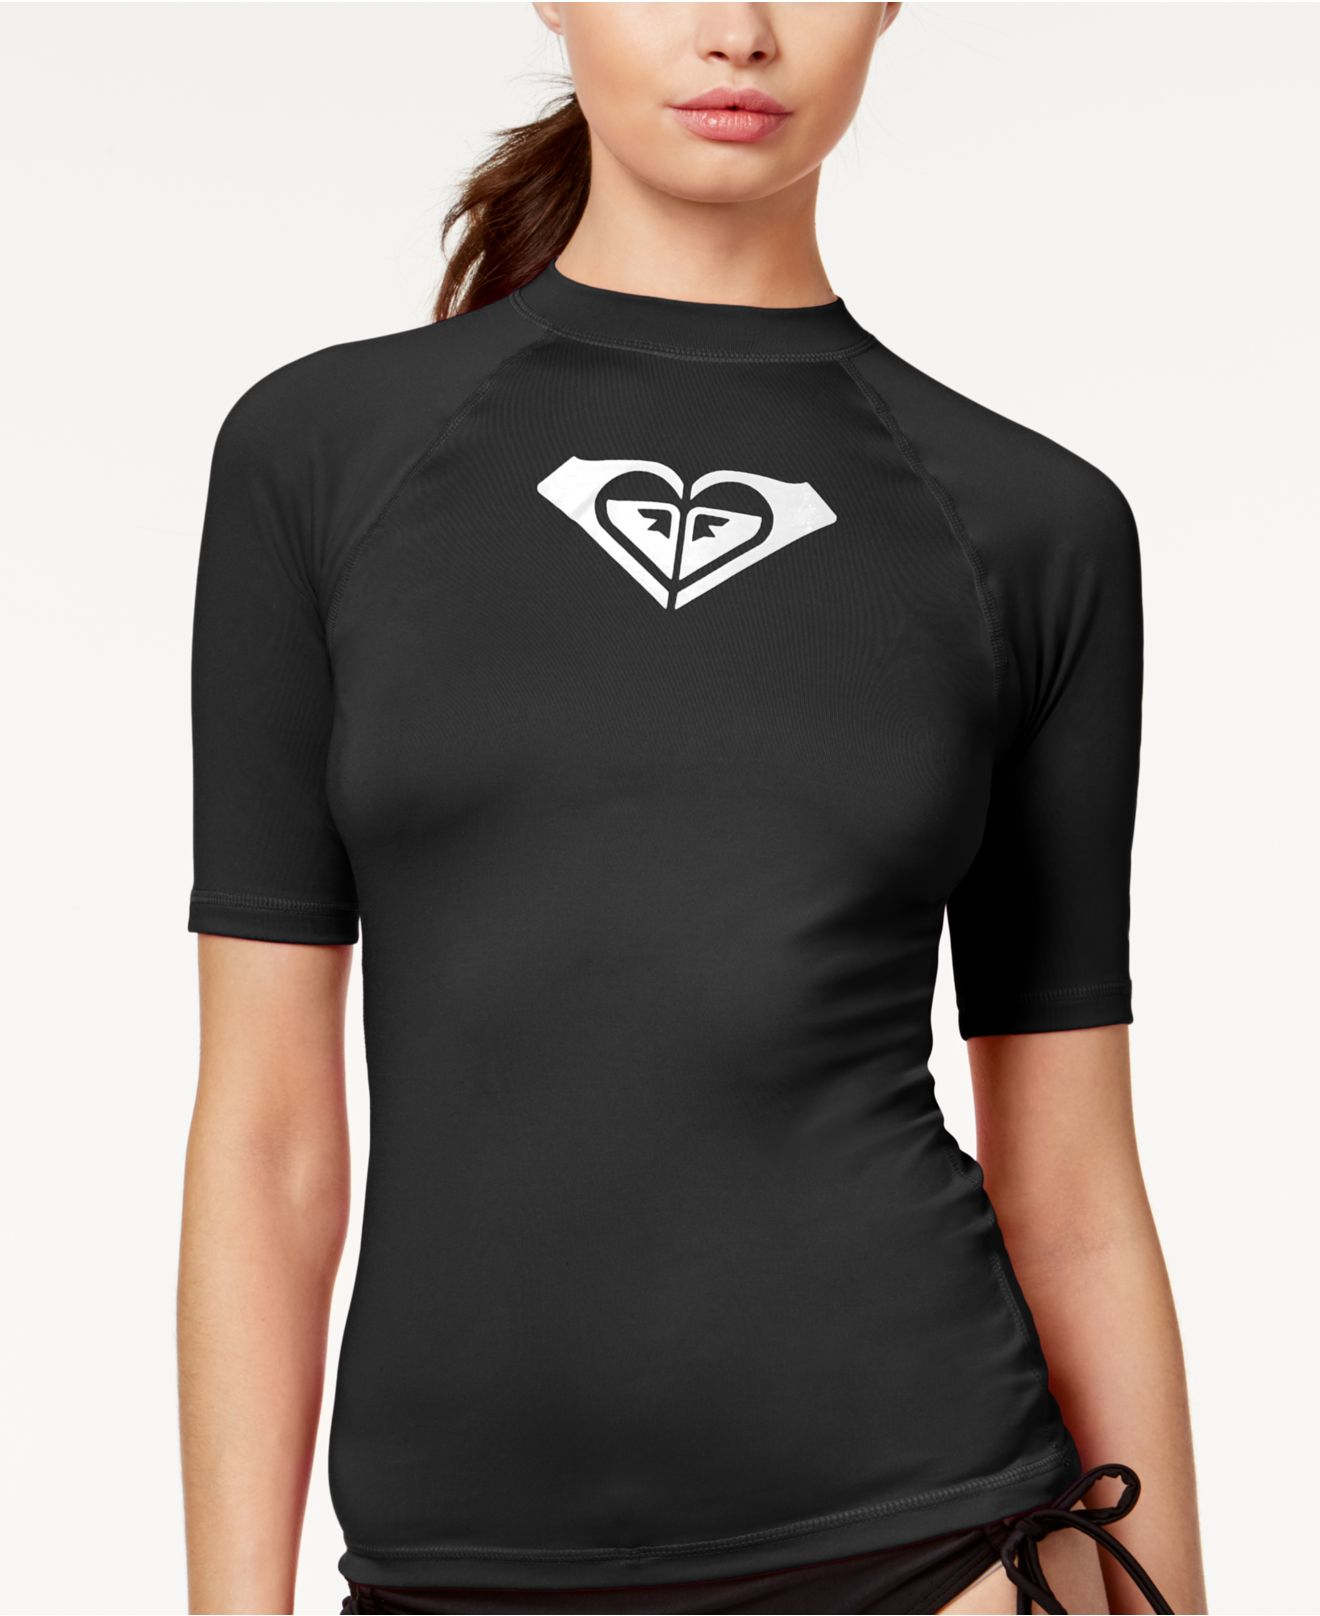  Roxy  Short sleeve Logo Rashguard in Black Black White 